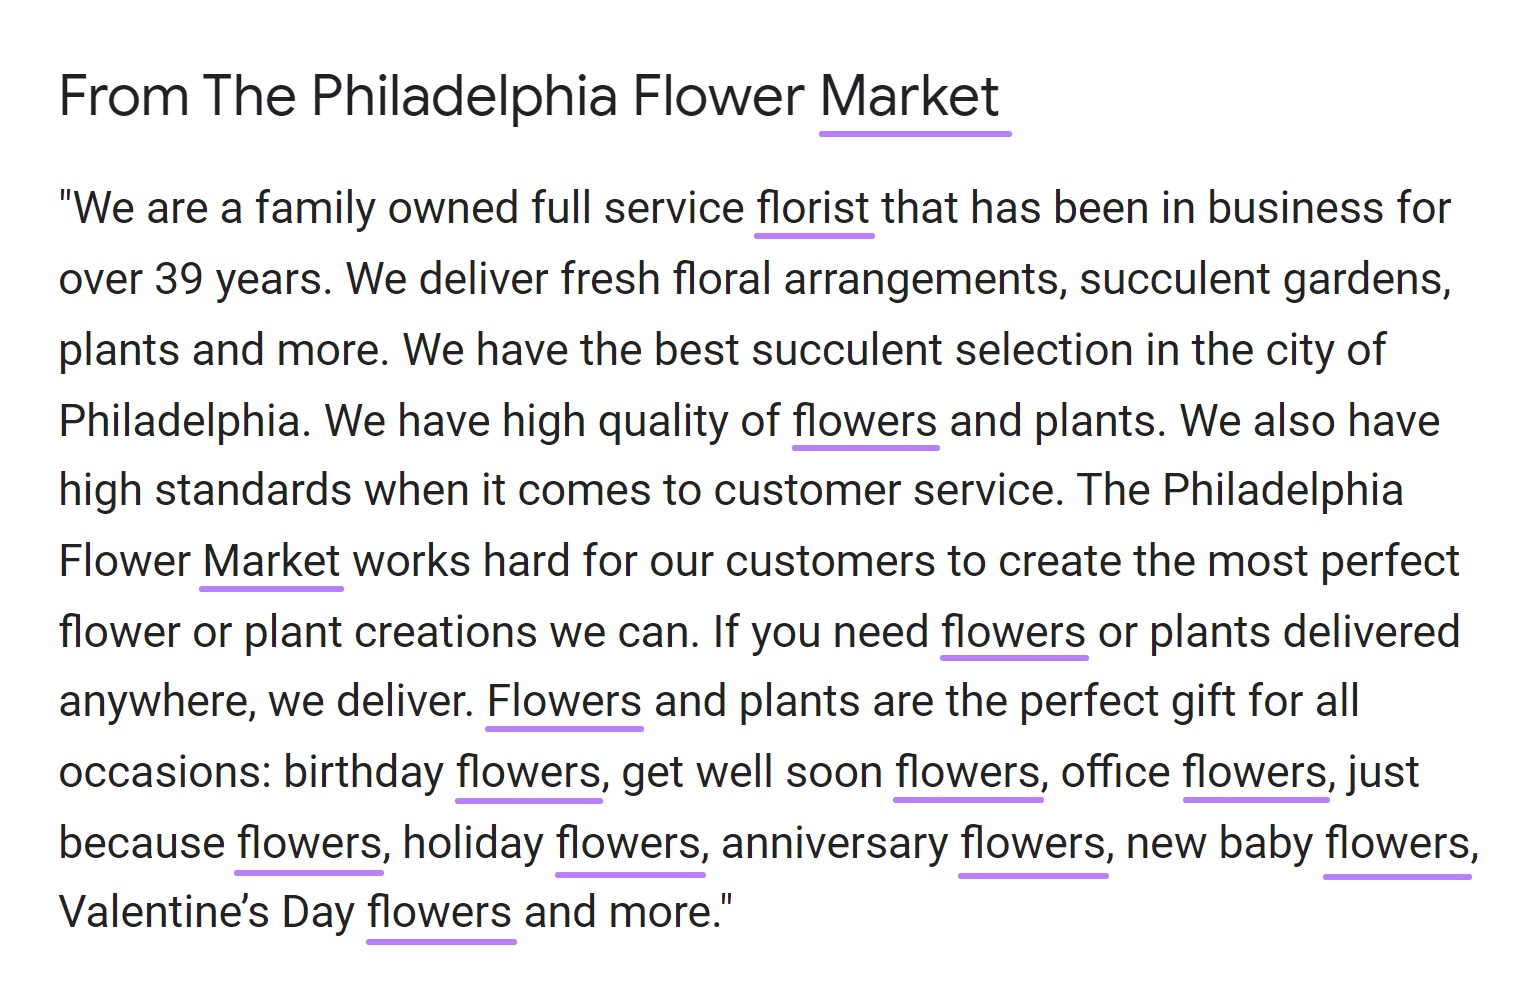 “florist,” “flowers,” and “market" keywords highlighted successful  The Philadelphia Flower Market description